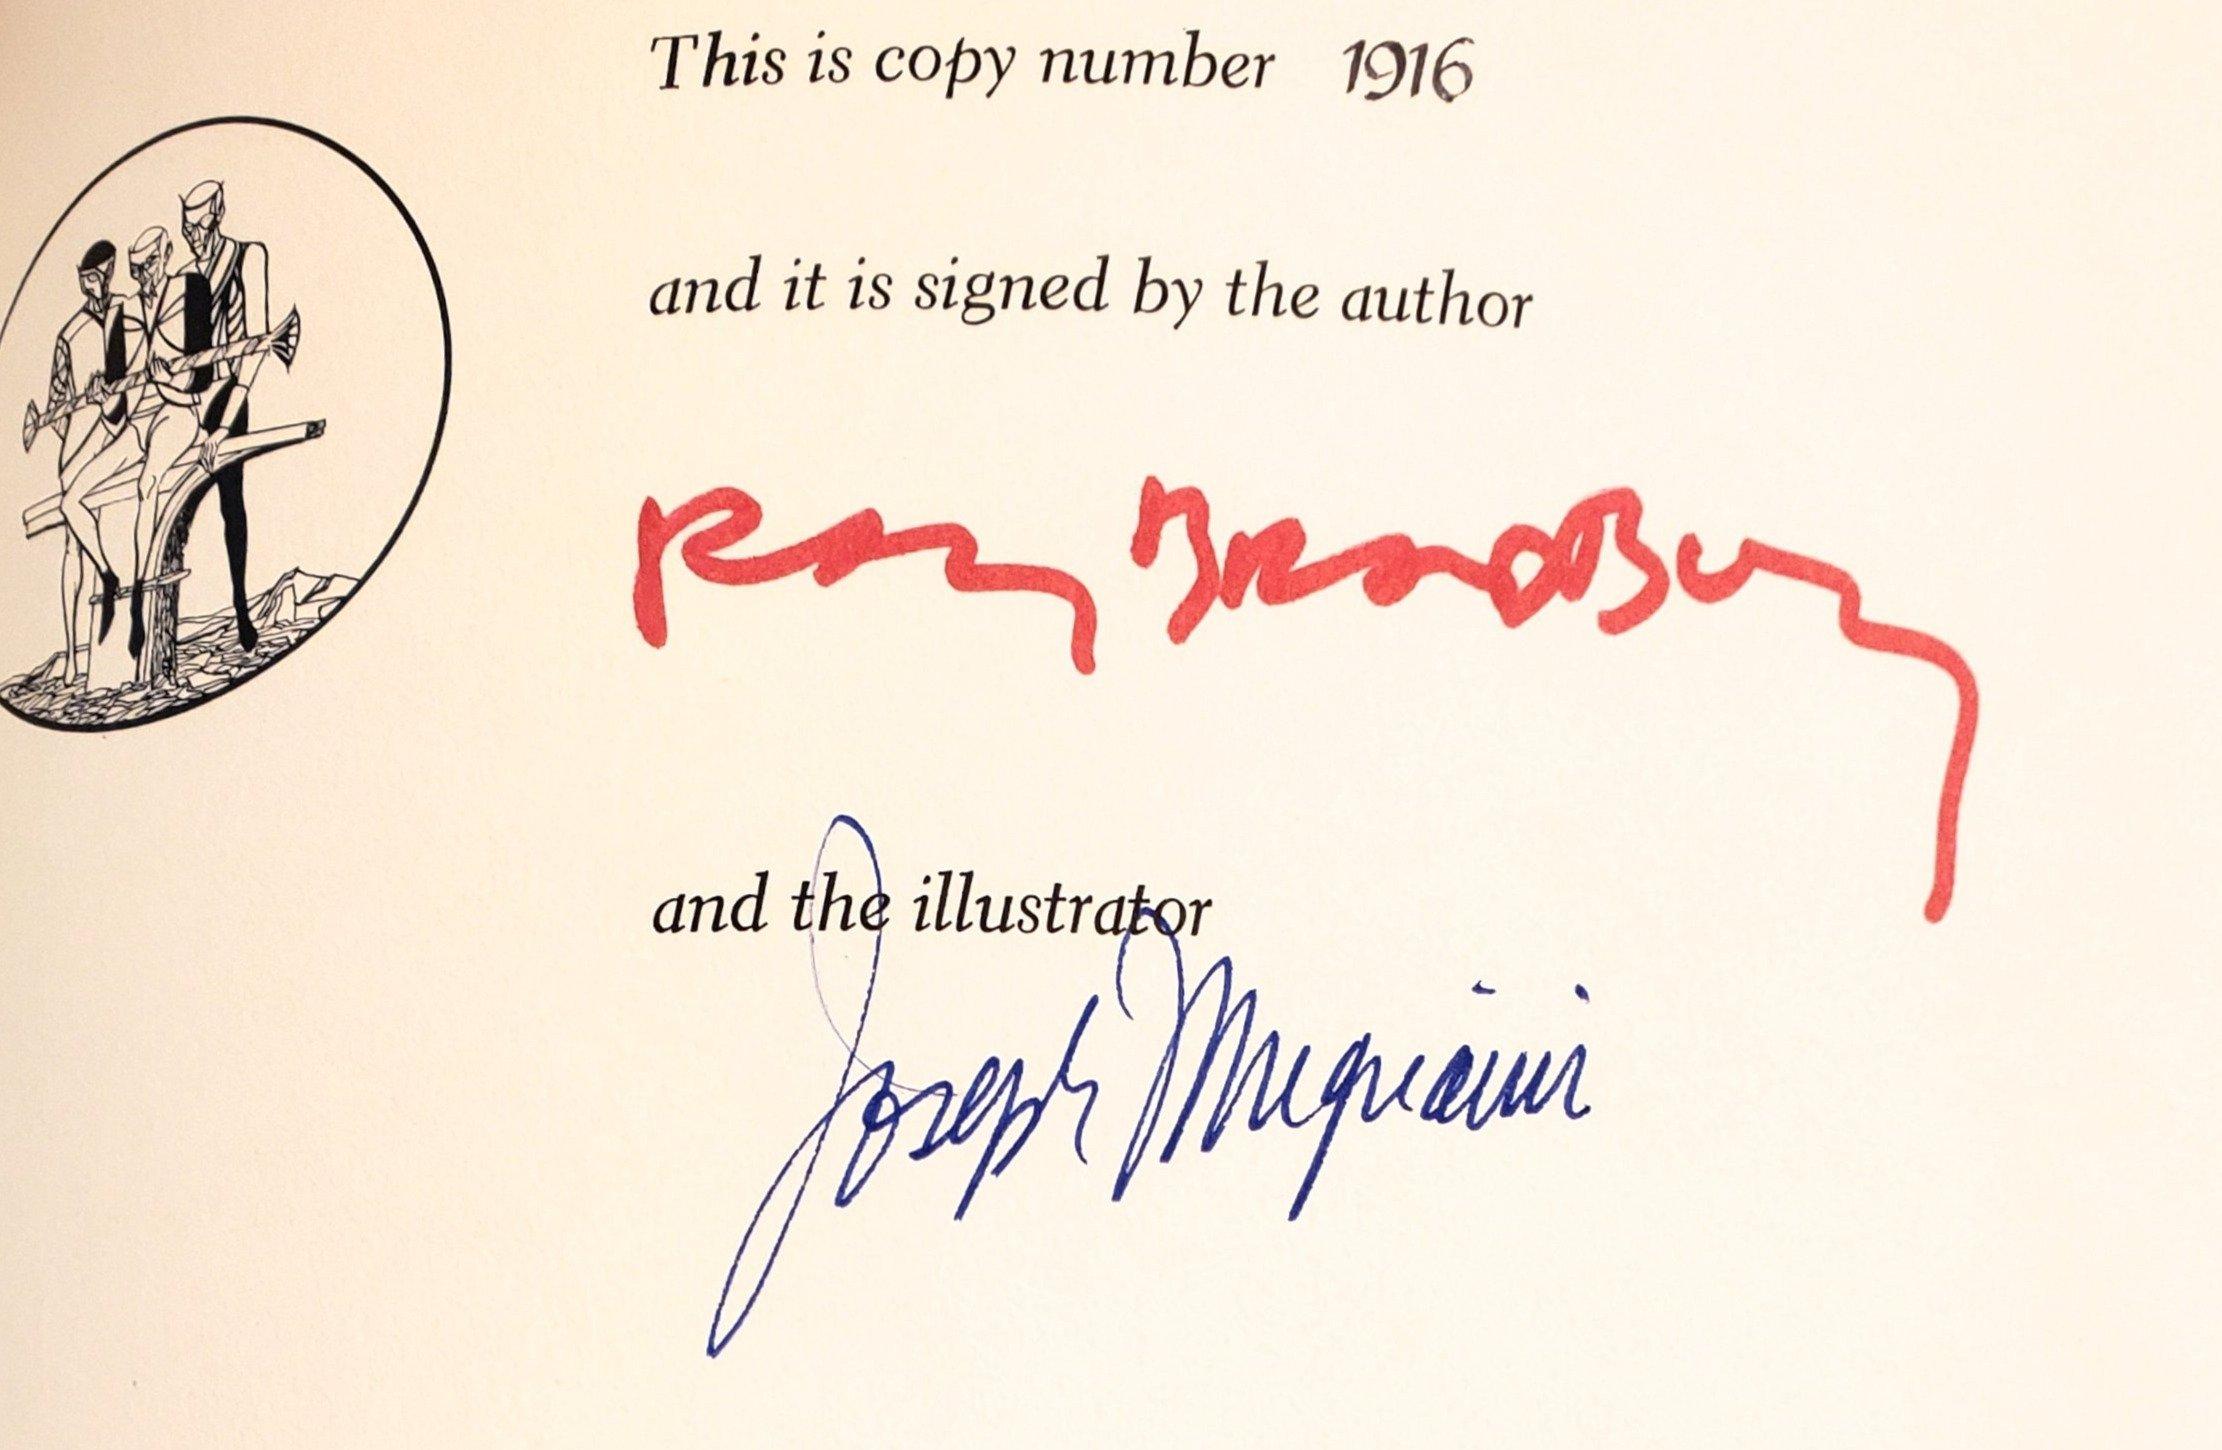 The Martian Chronicles, signed by Ray Bradbury and Illustrator Joe Mugnaini, Limited Edition #1916 of 2000, 1974

Bradbury, Ray. The Martian Chronicles. Avon: The Limited Editions Club, 1974. Signed by Ray Bradbury and Joseph Mugnaini. Limited